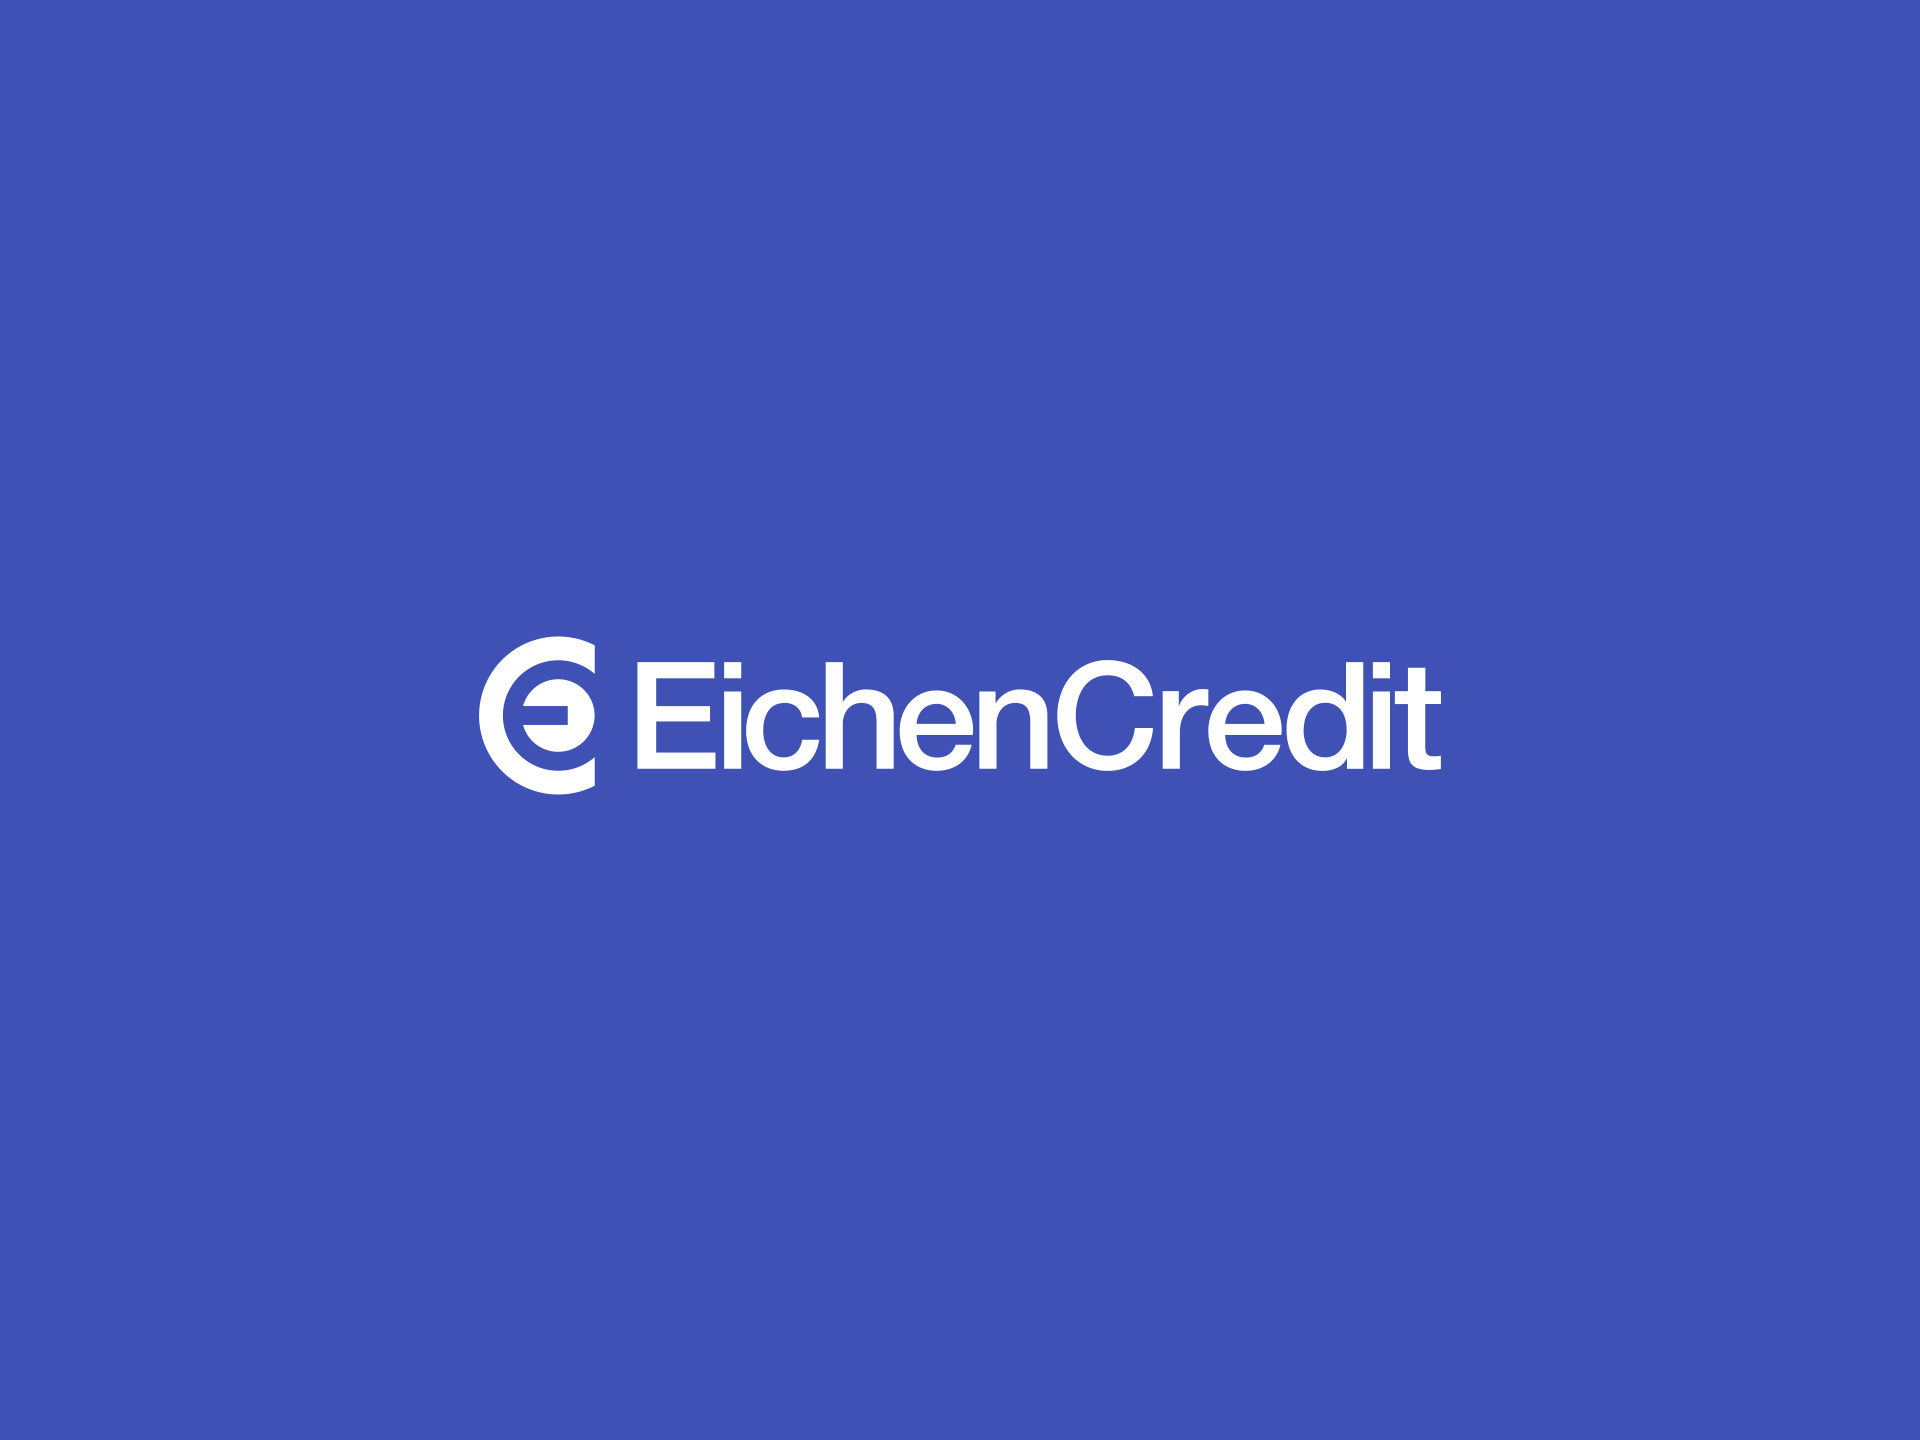 EichenCredit Brand Identity & Product Design ()